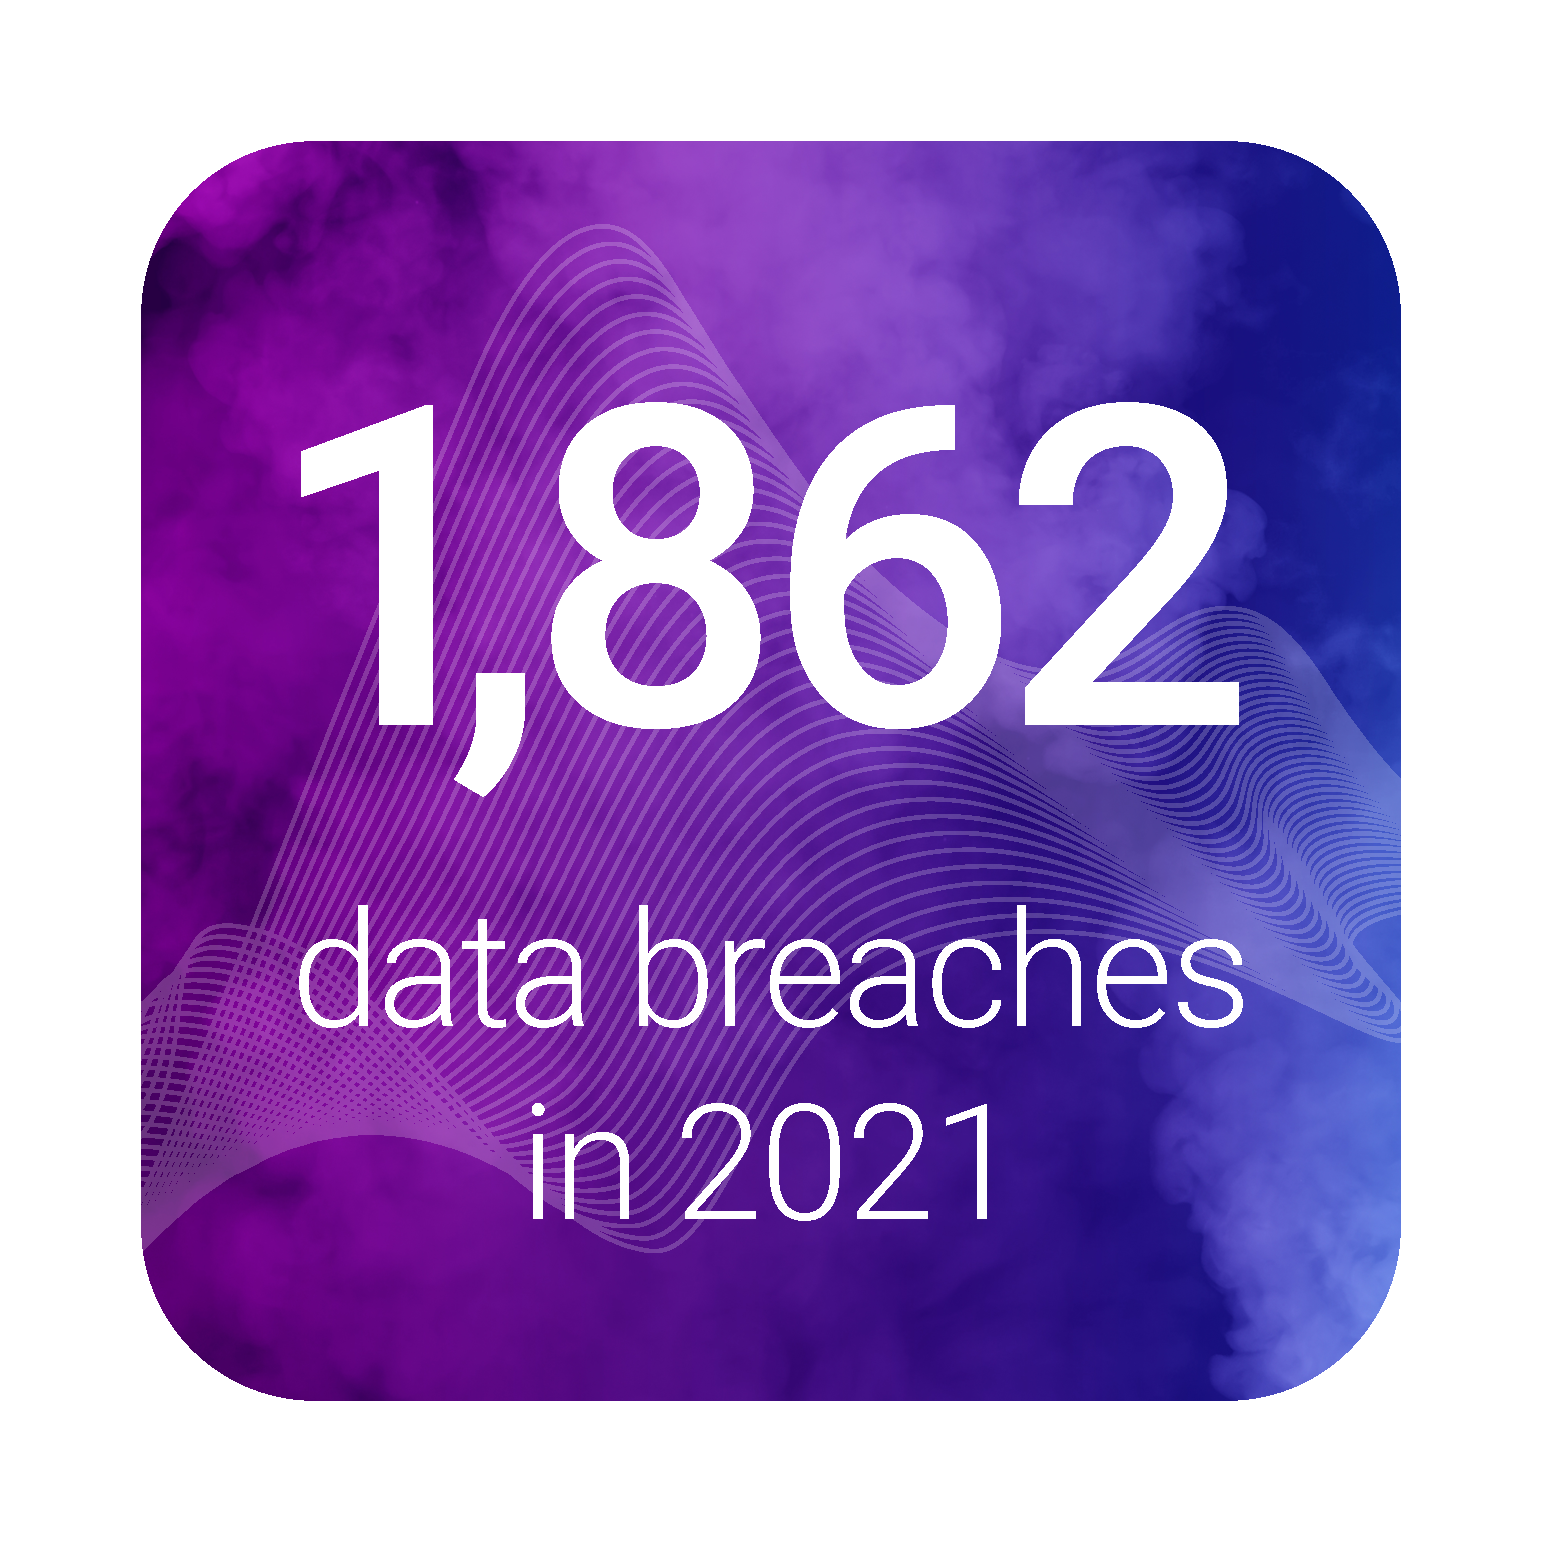 1,821 data breaches in 2021